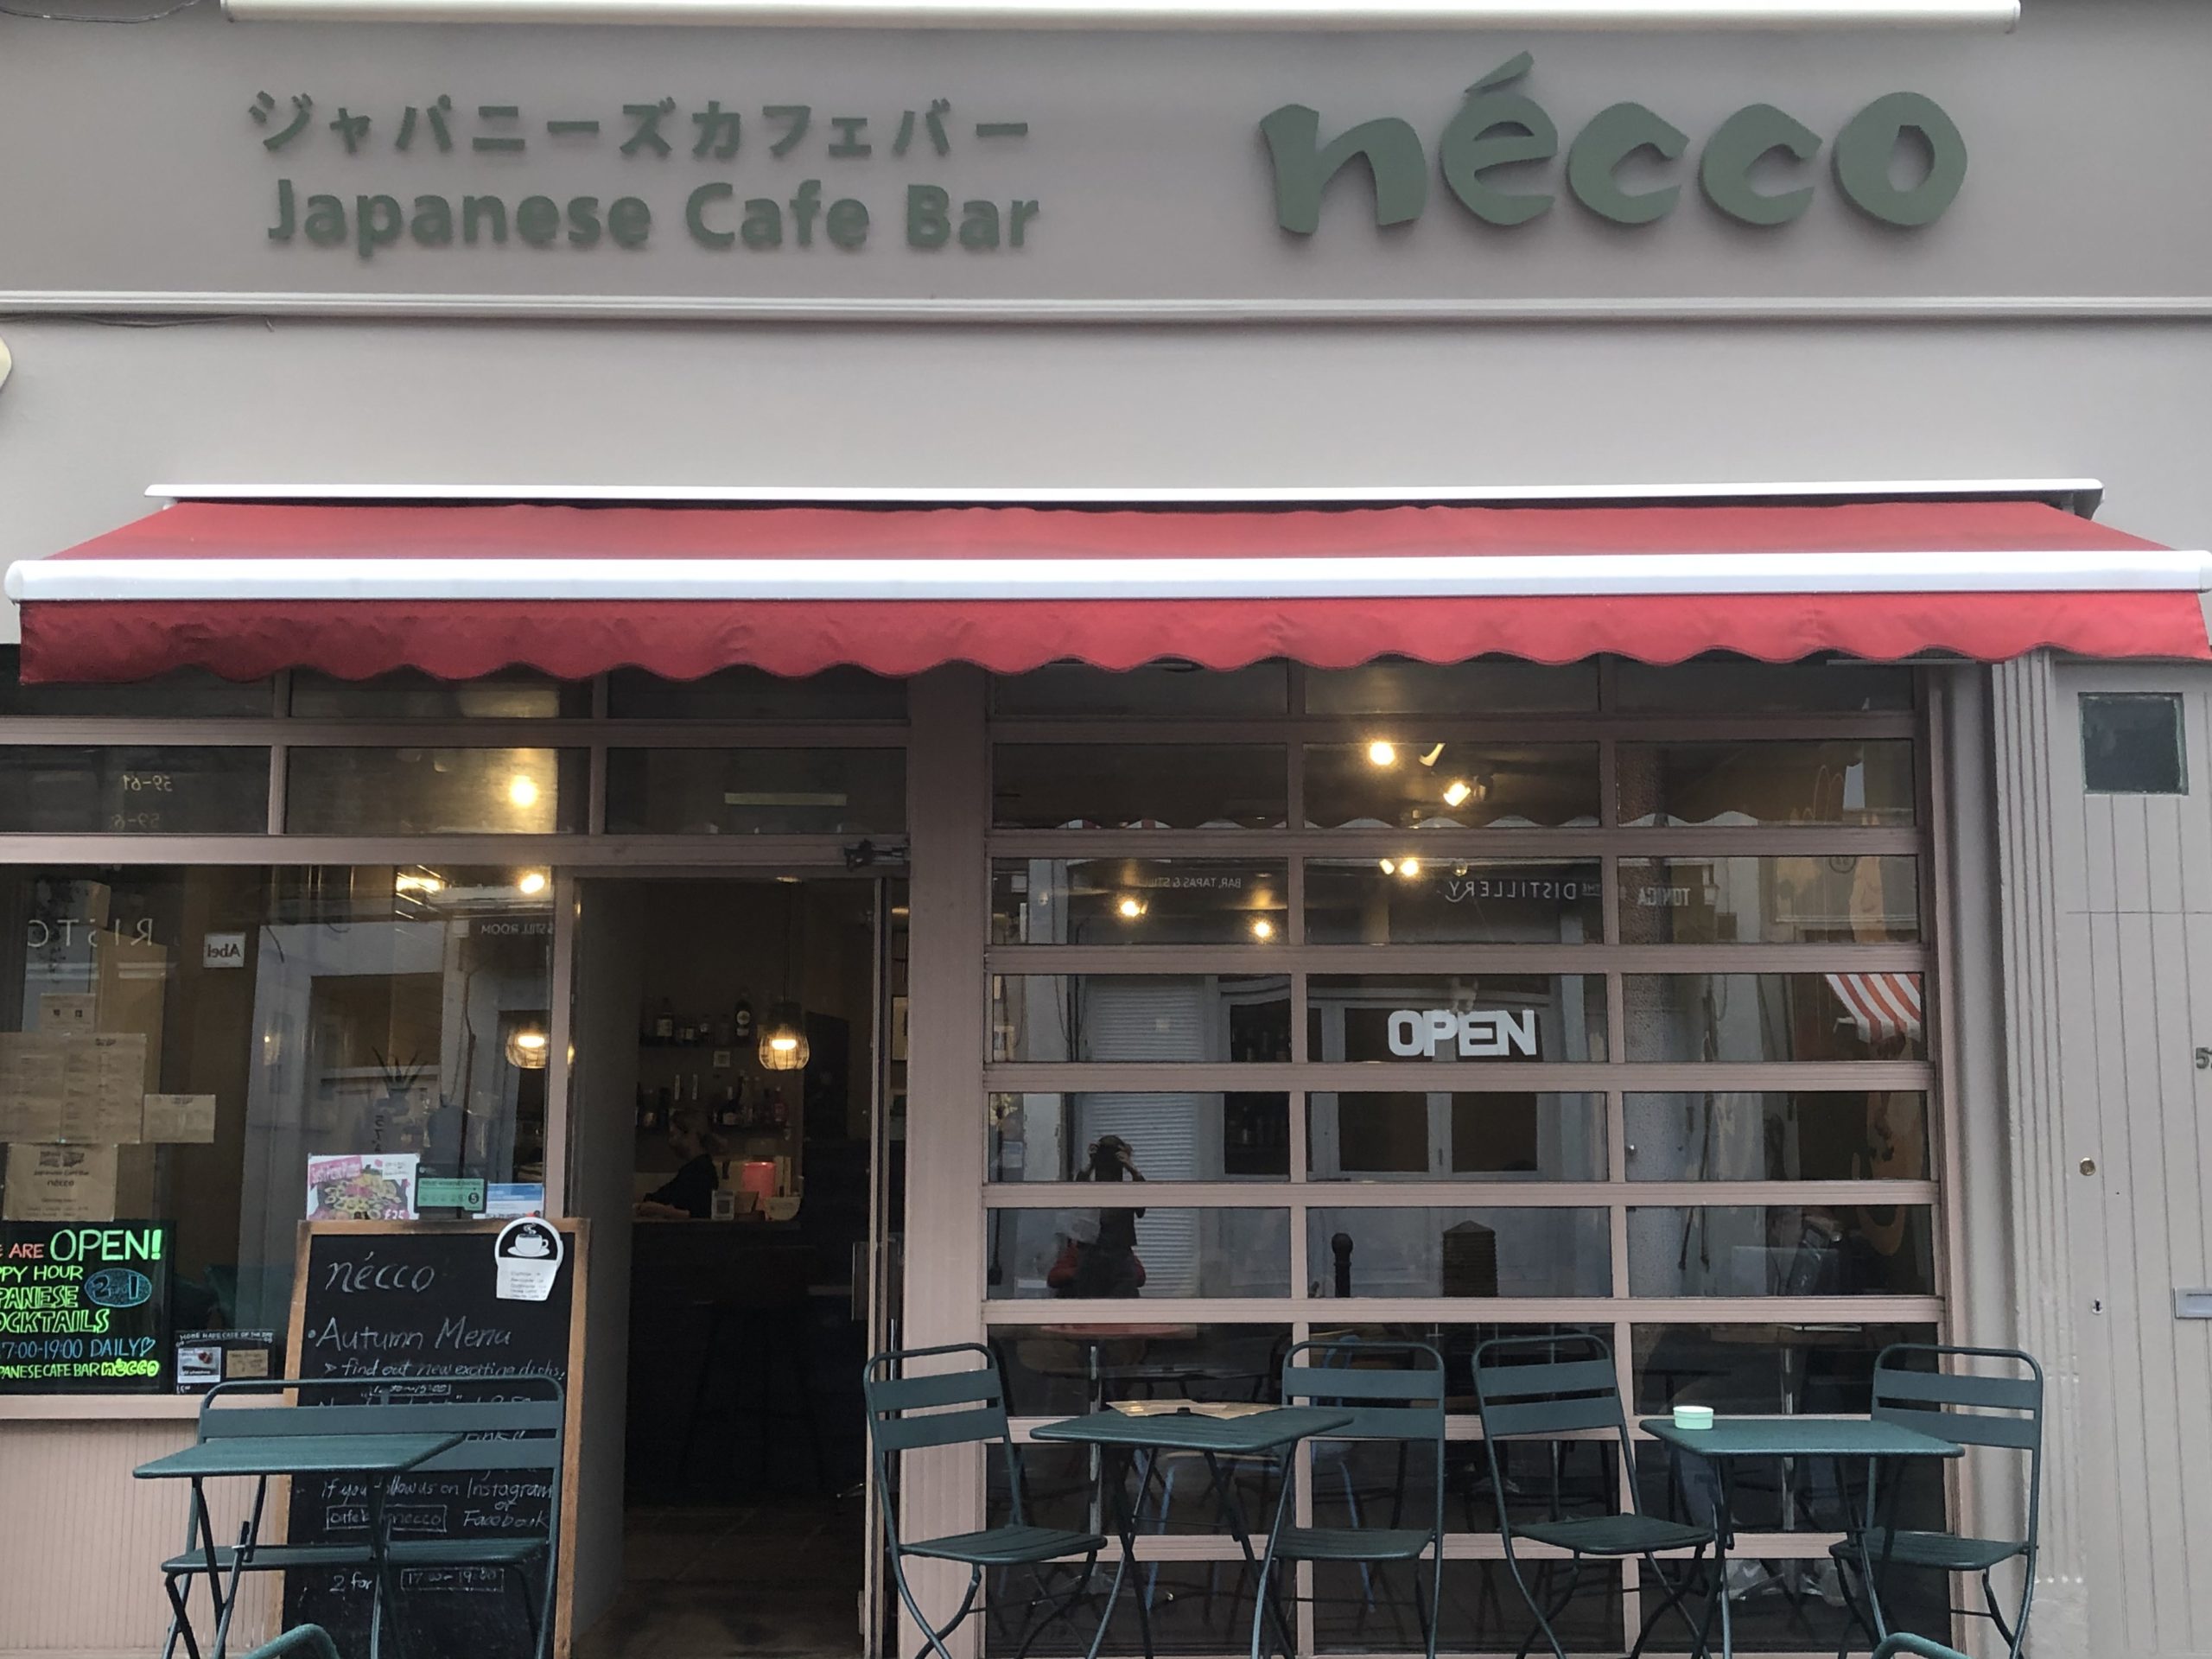 Necco Japanese Cafe Bar 52-54 Exmouth Market London EC1R 4QE